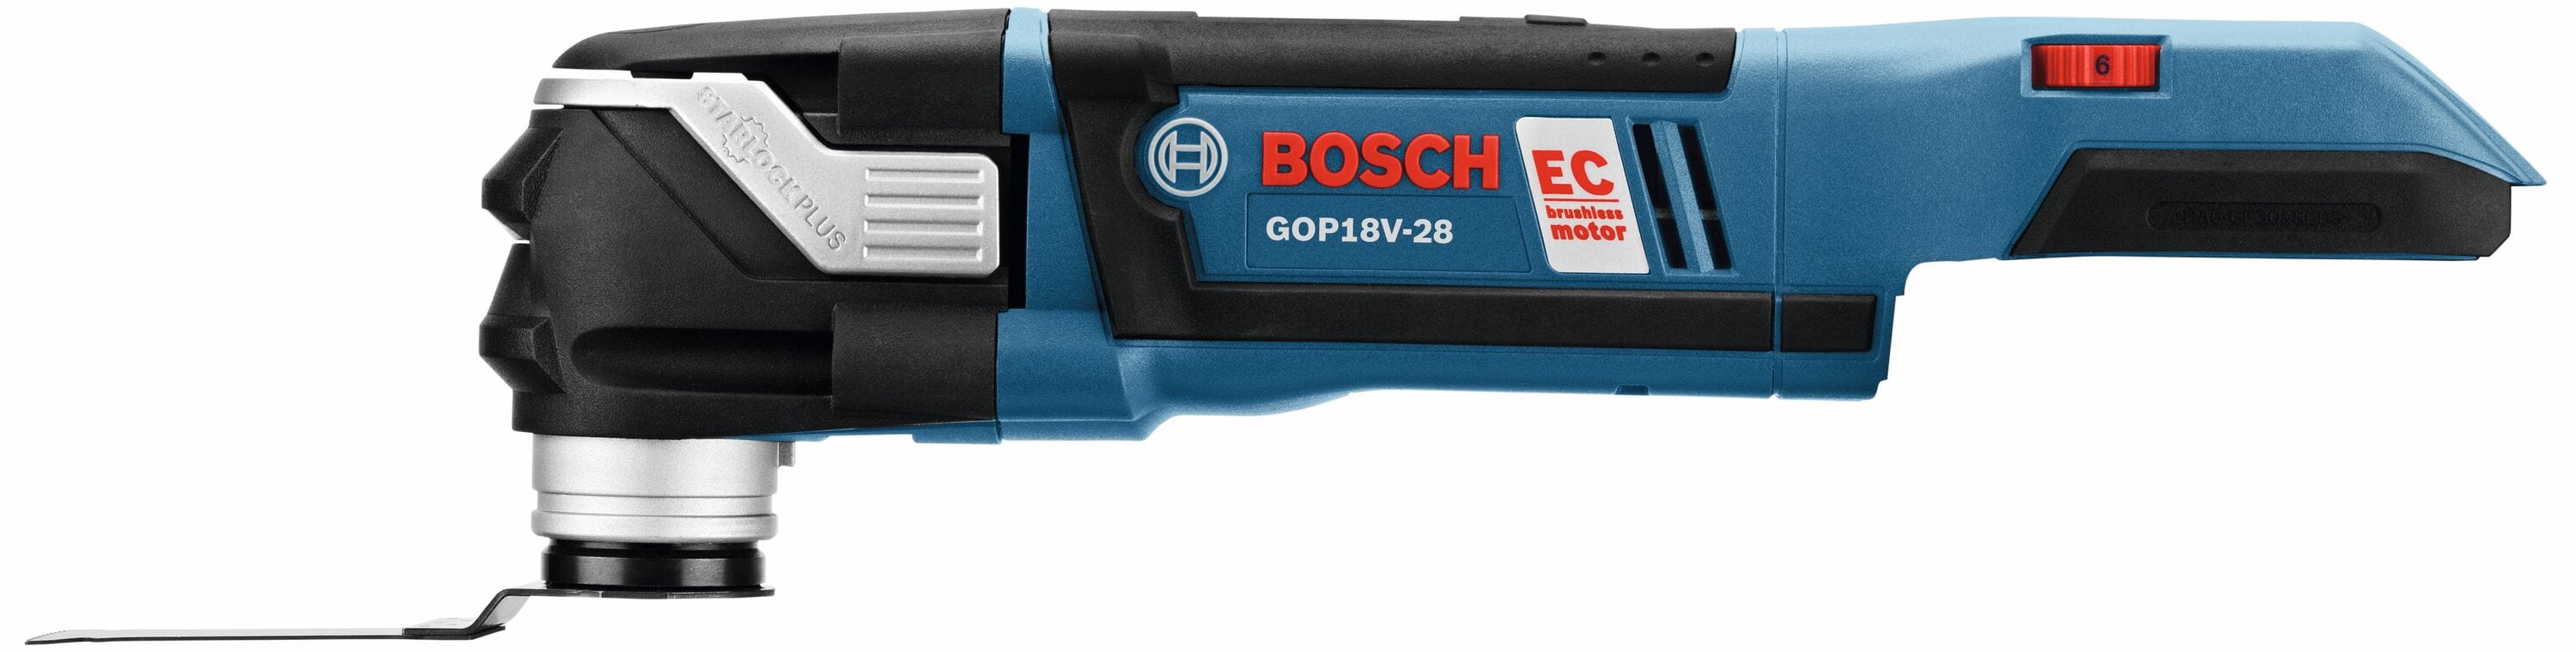 BOSCH GOP18V-28N Bare Tool 18V EC Brushless StarlockPlus Oscillating  Multi-Tool with 2.0 AH battery